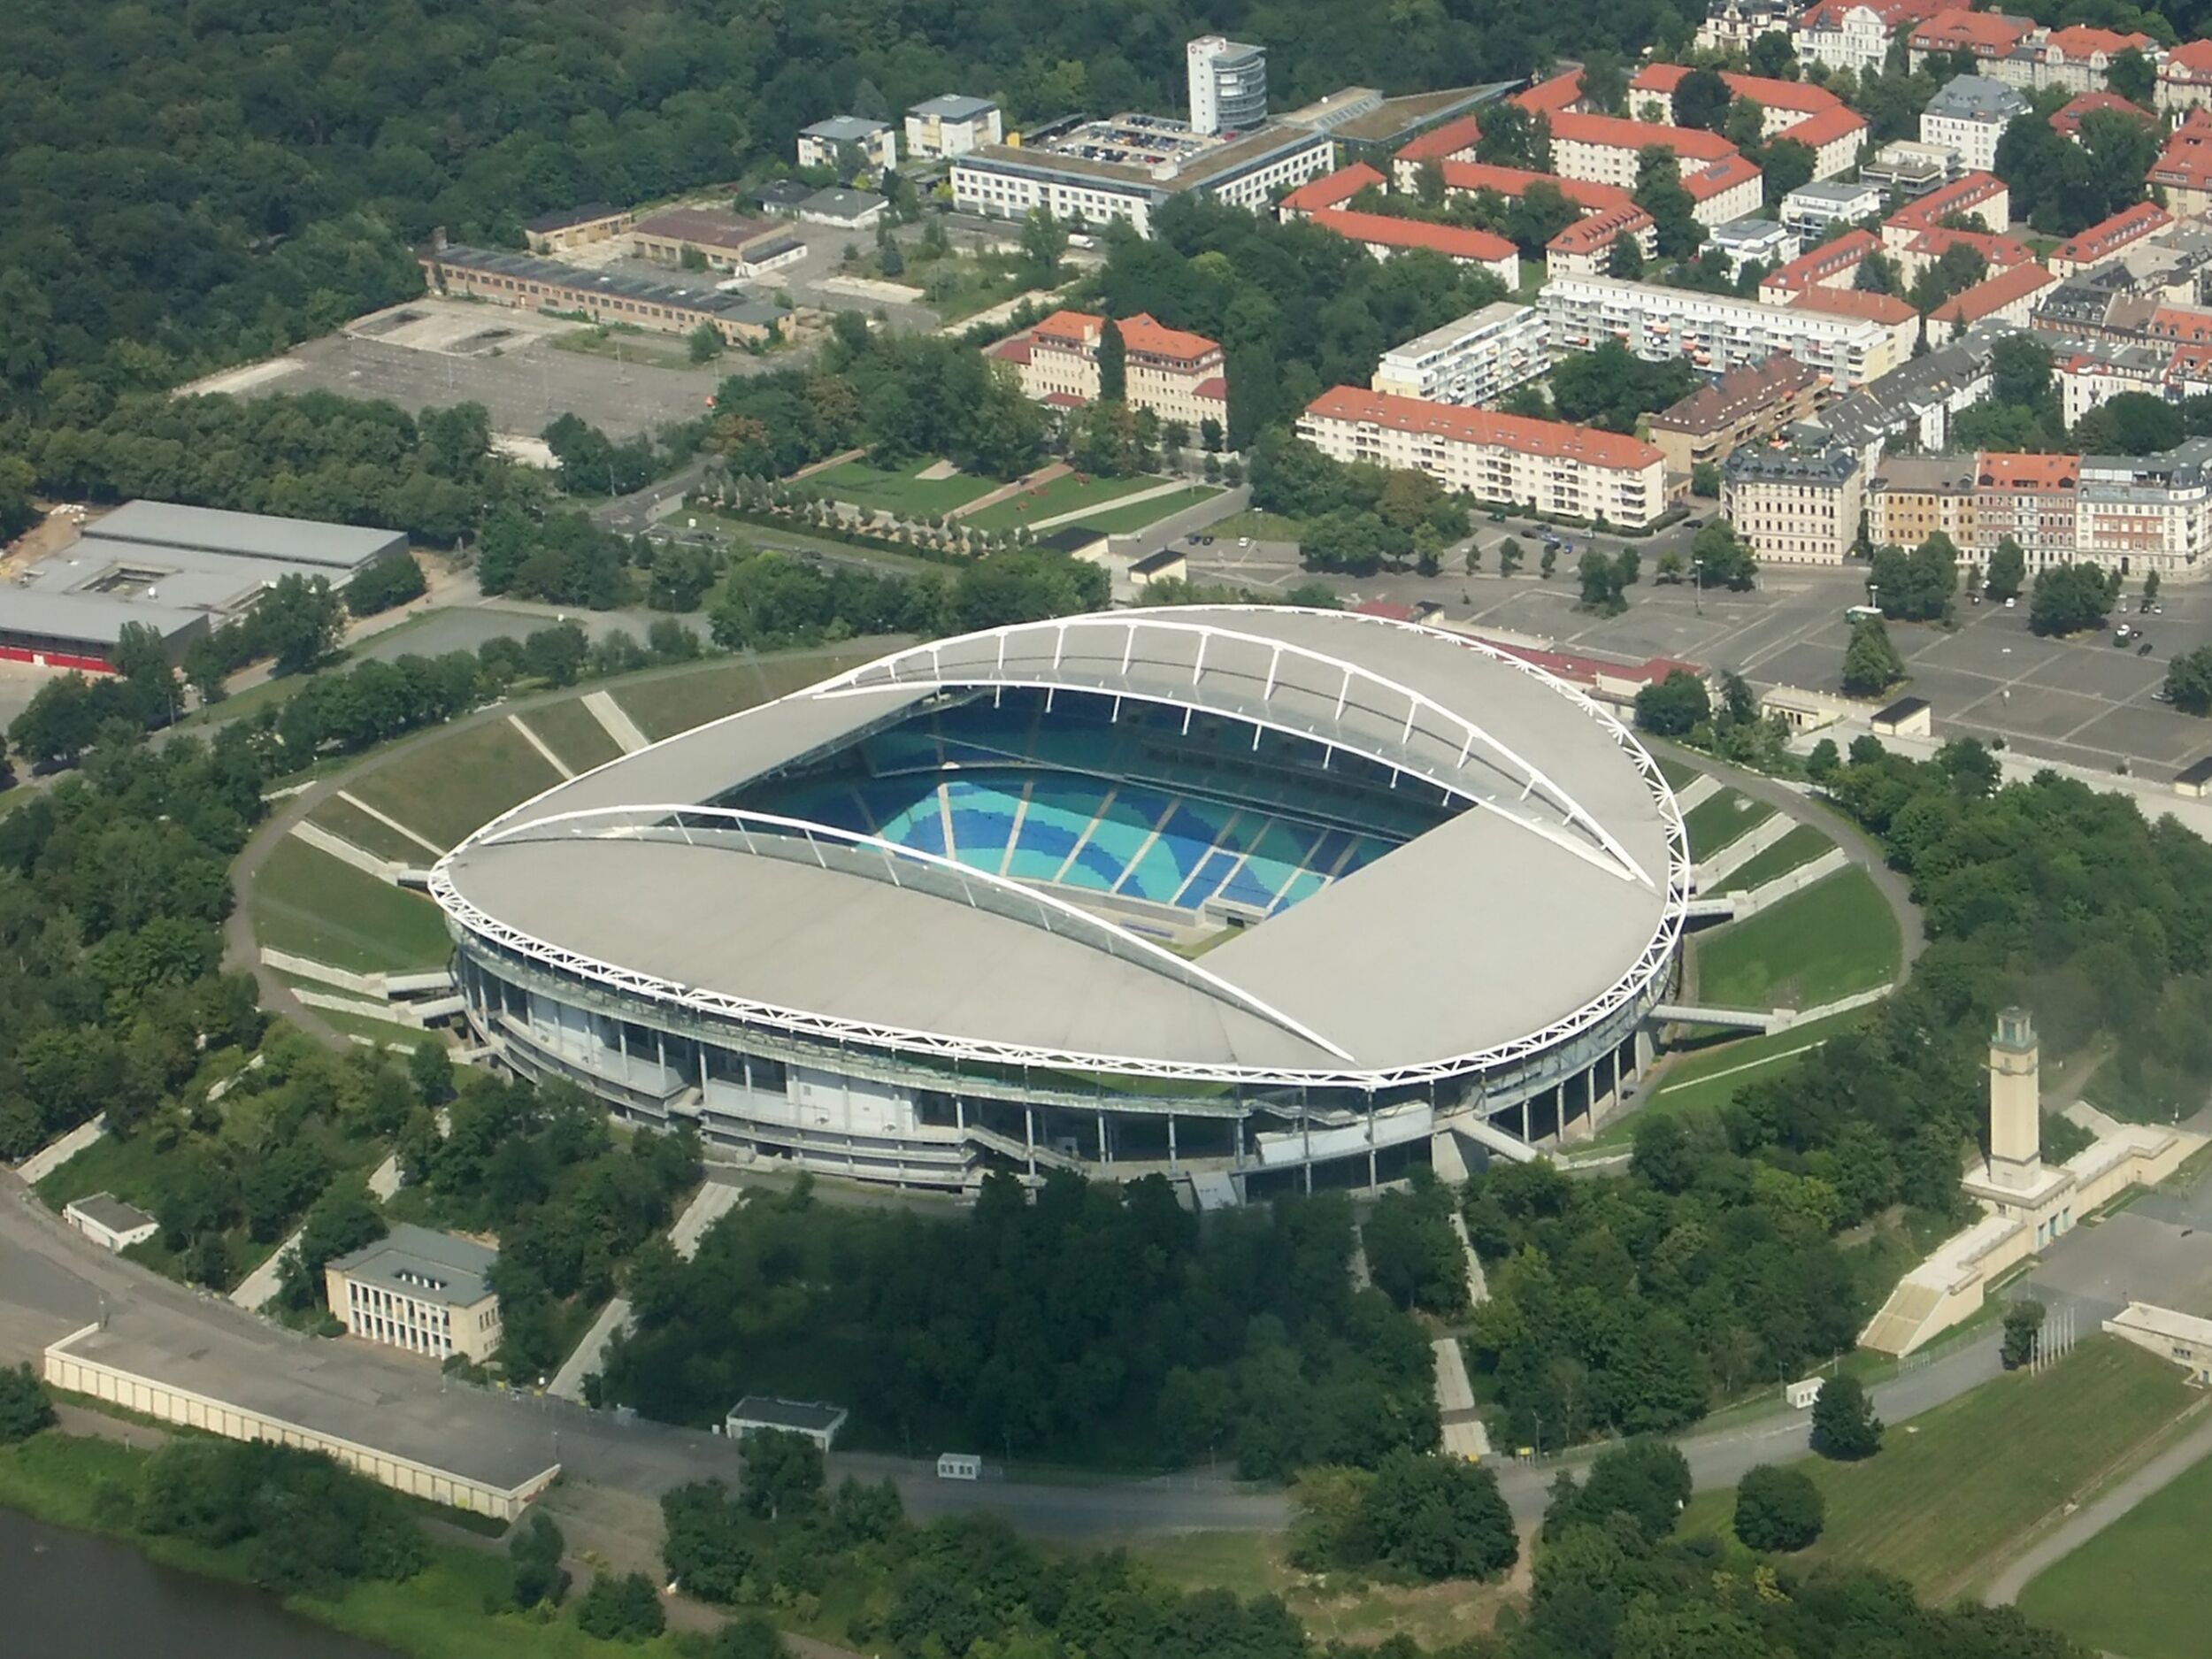 Picture Zentralstadion Leipzig 2008